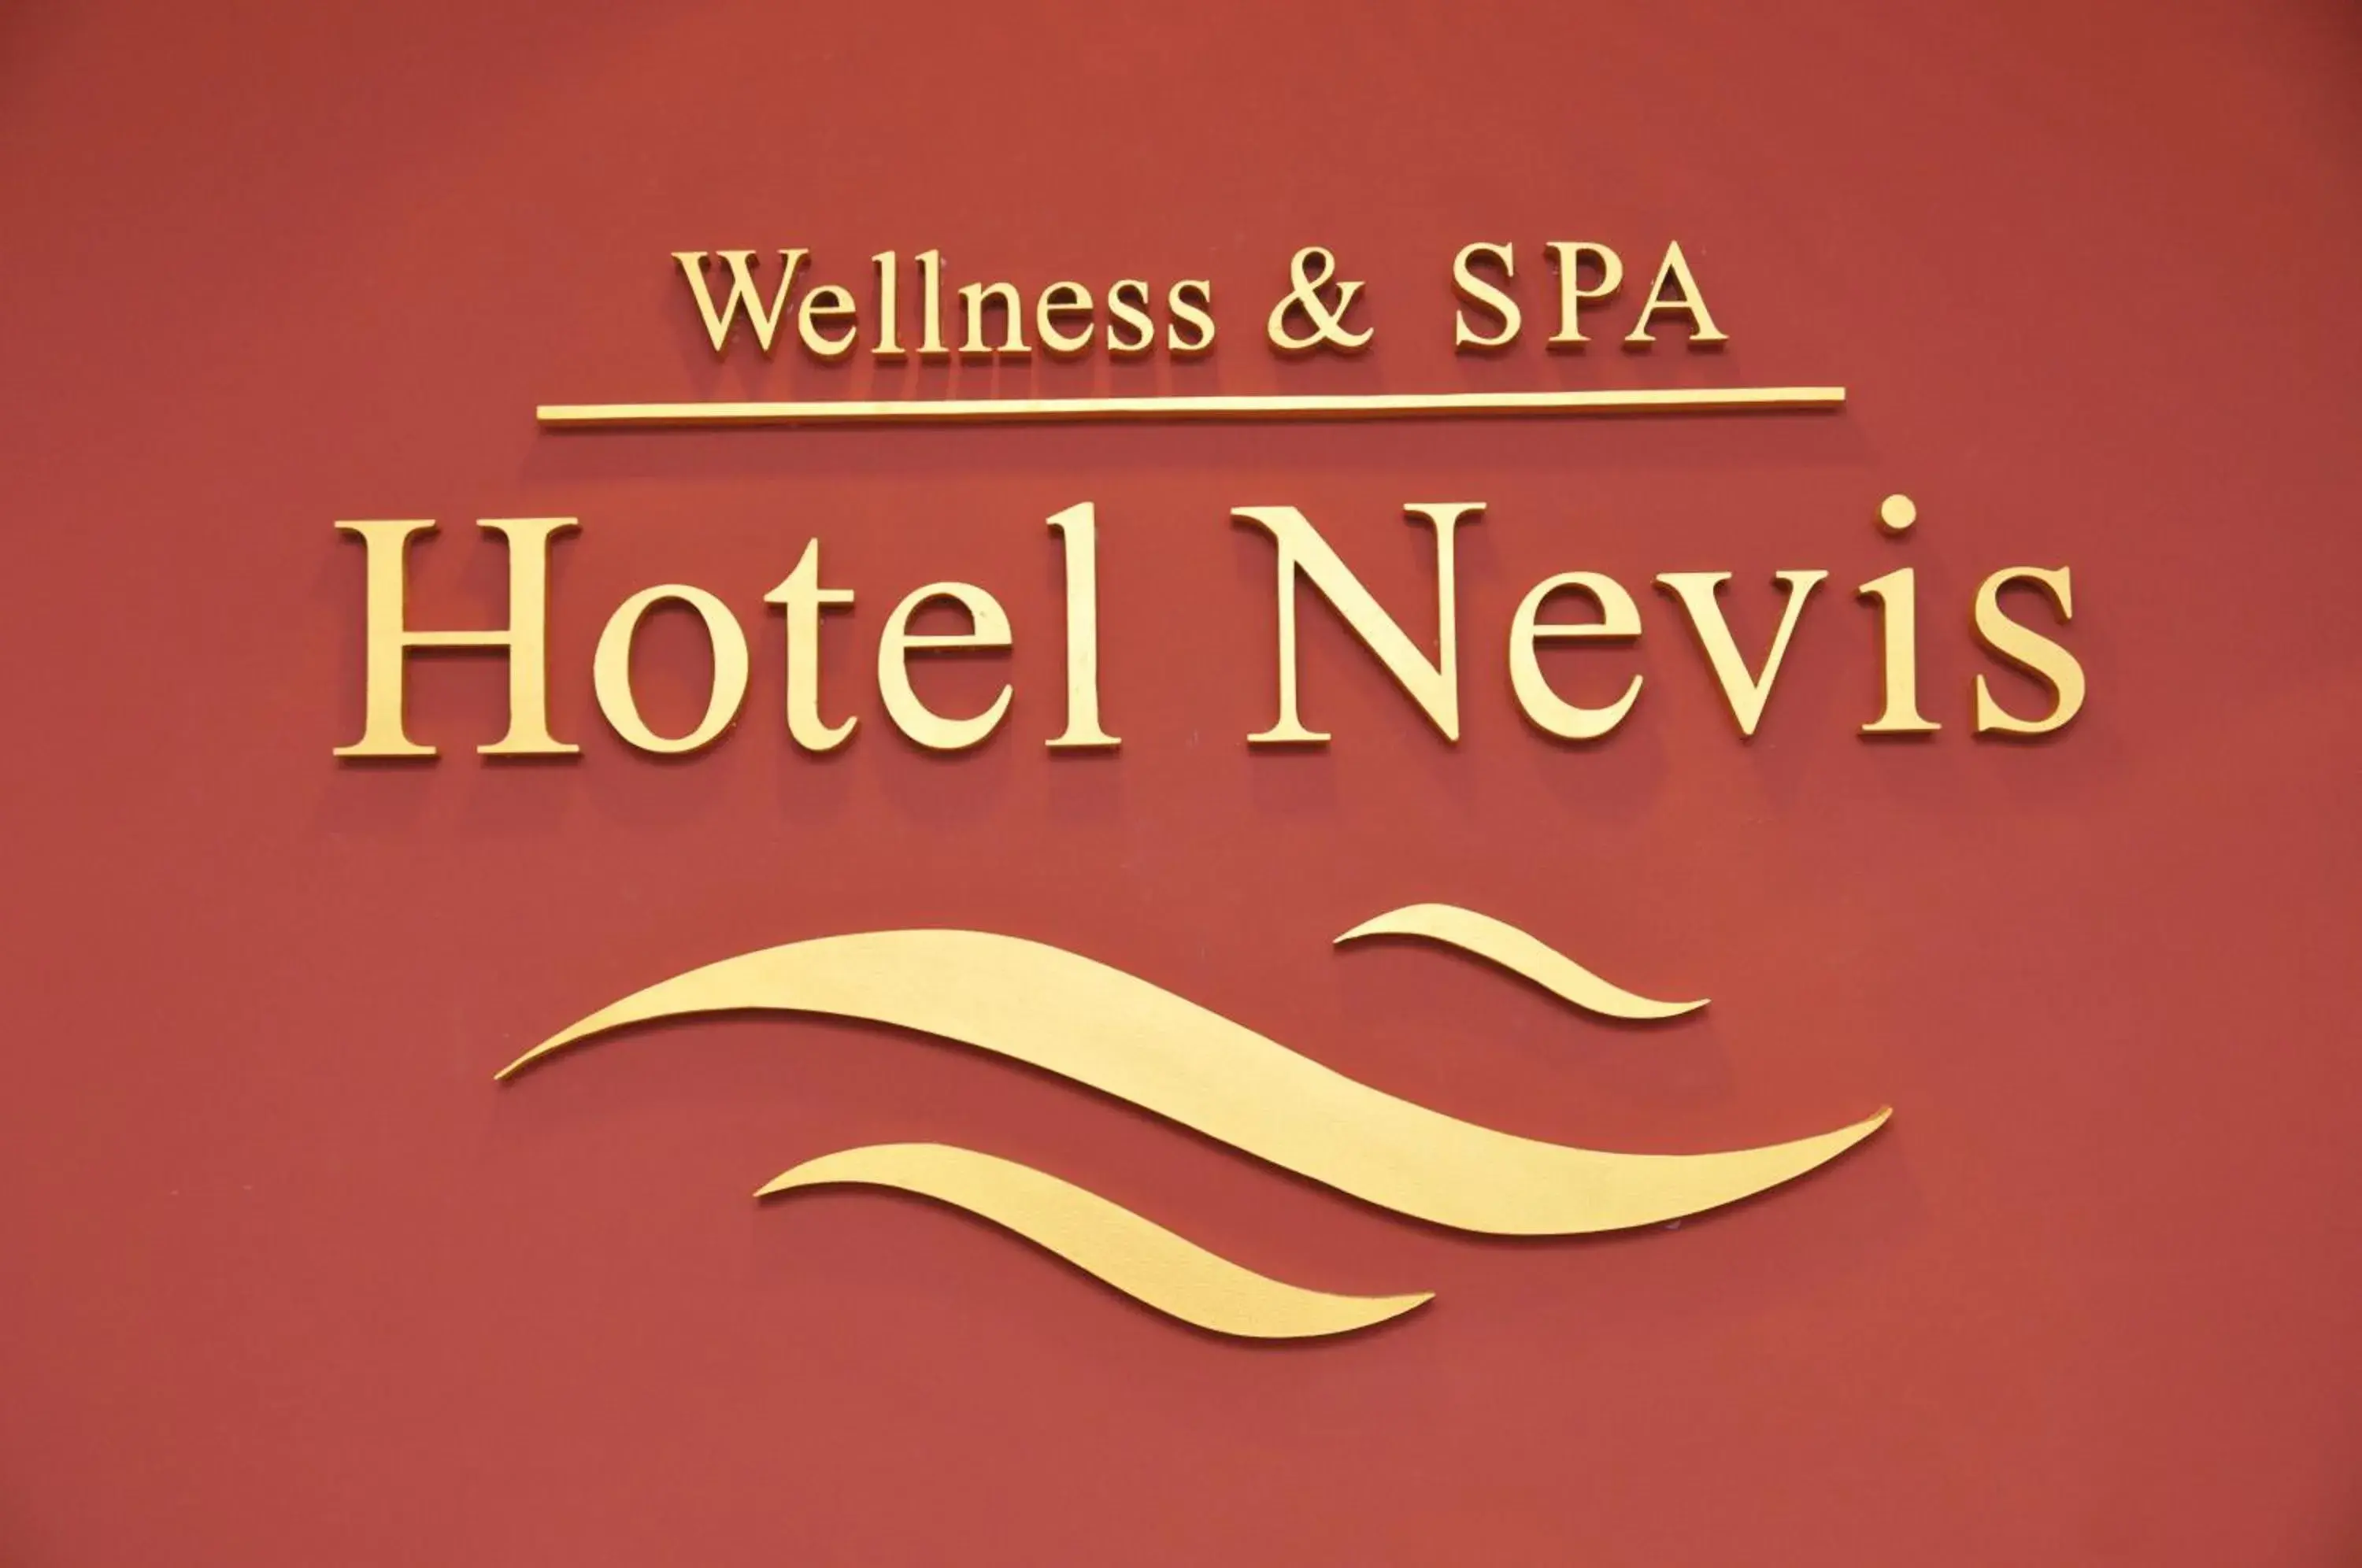 Decorative detail in Hotel Nevis Wellness & SPA